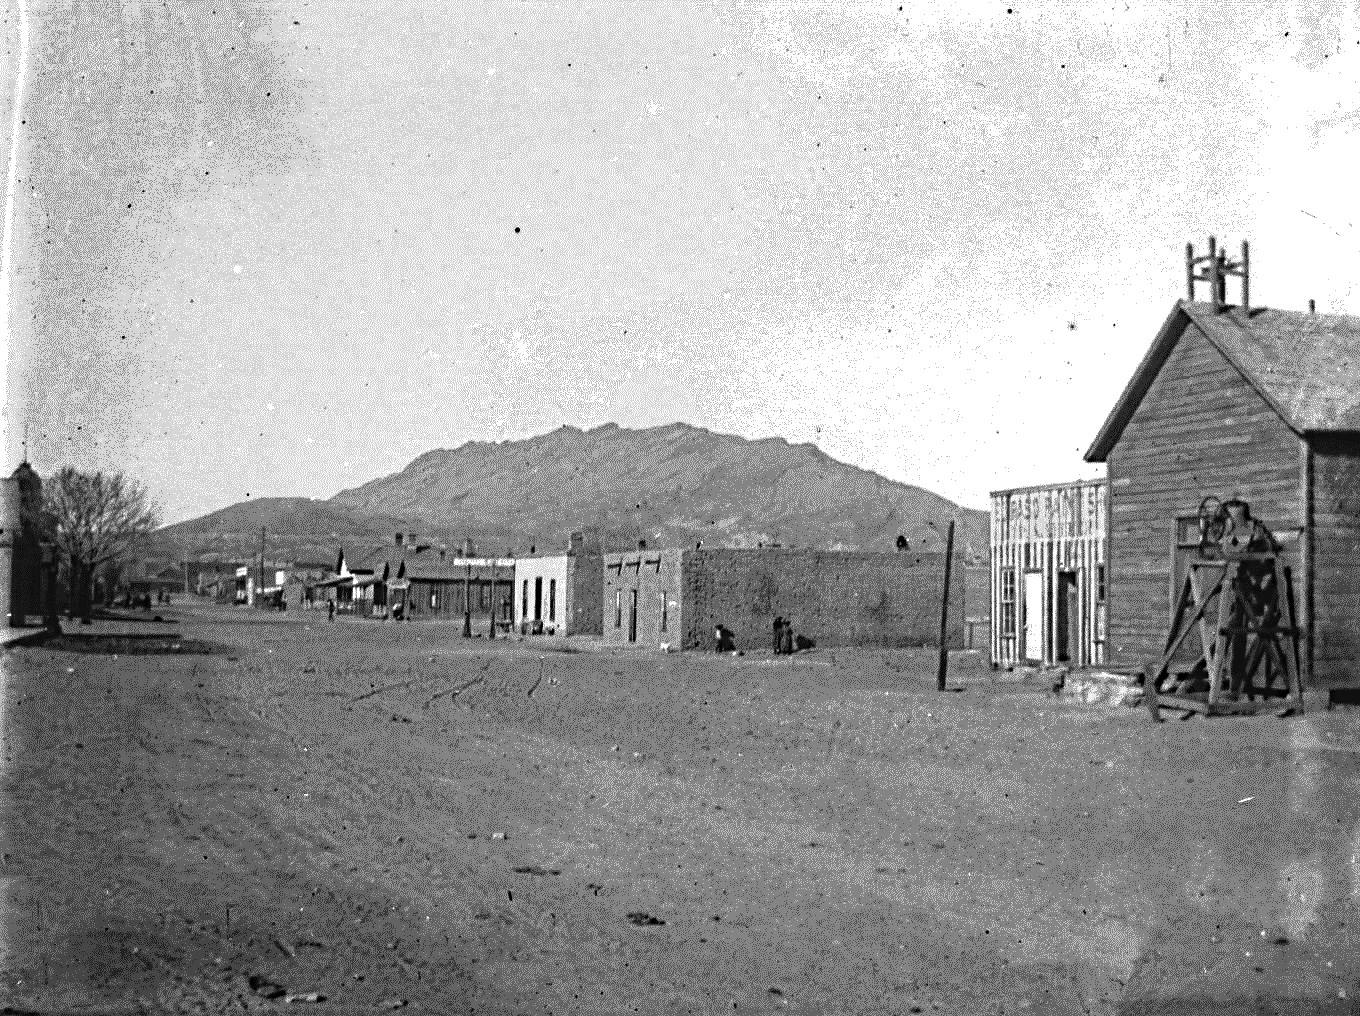 El Paso Street Scene in March 1892